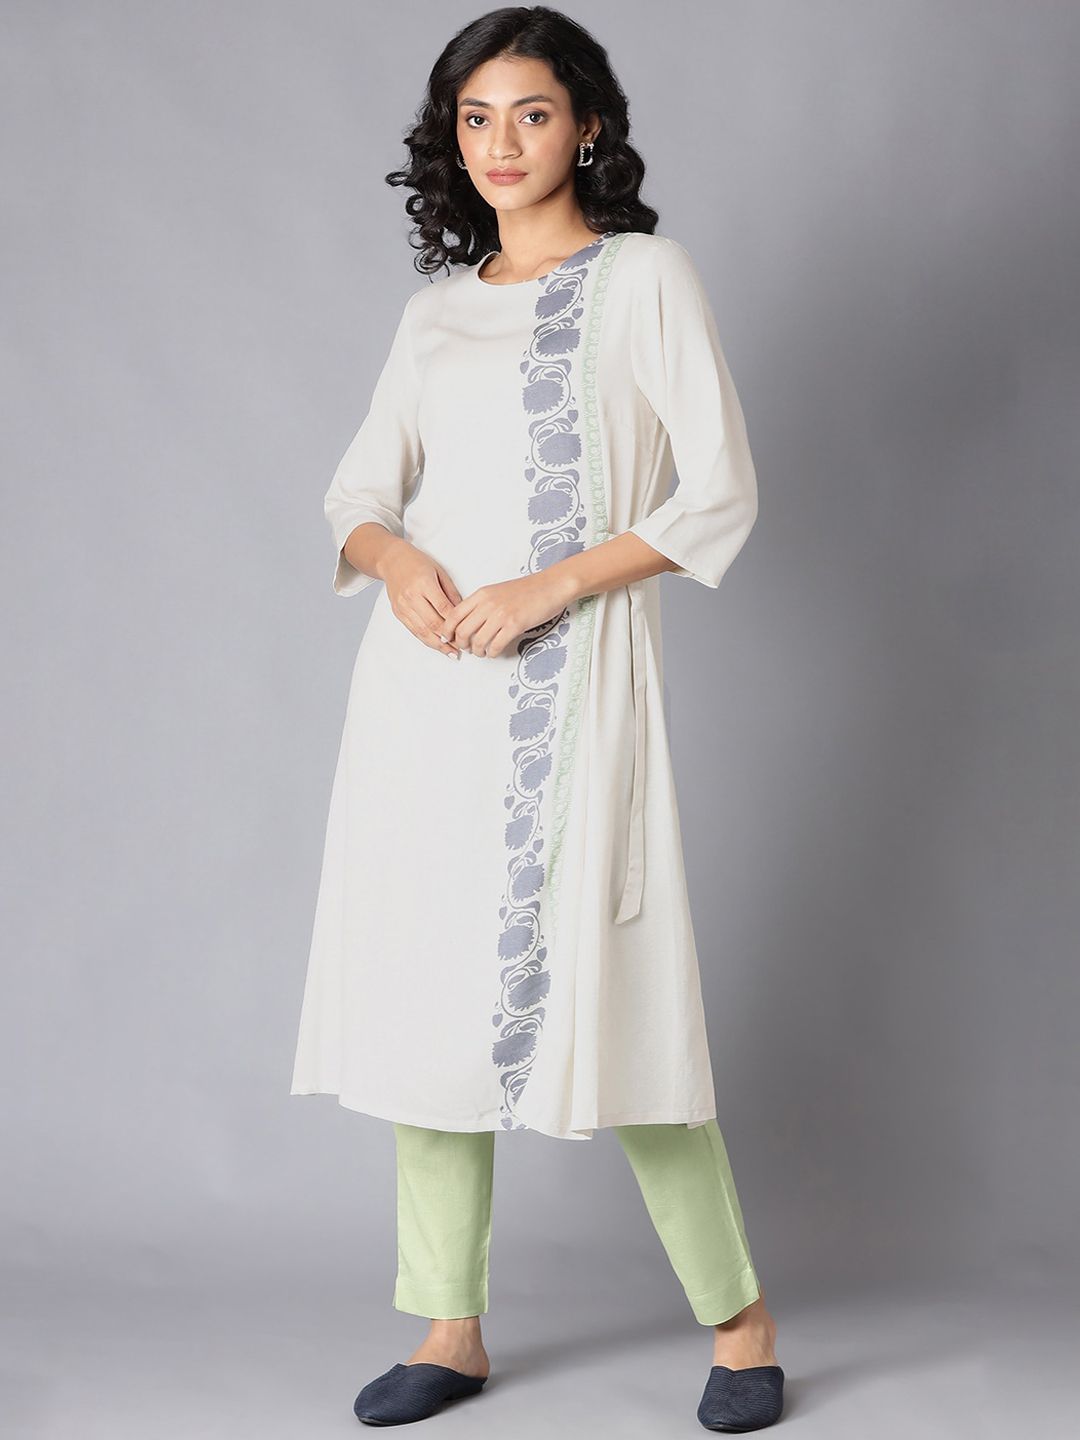 W Women White Floral Embroidered Thread Work Kurta Price in India